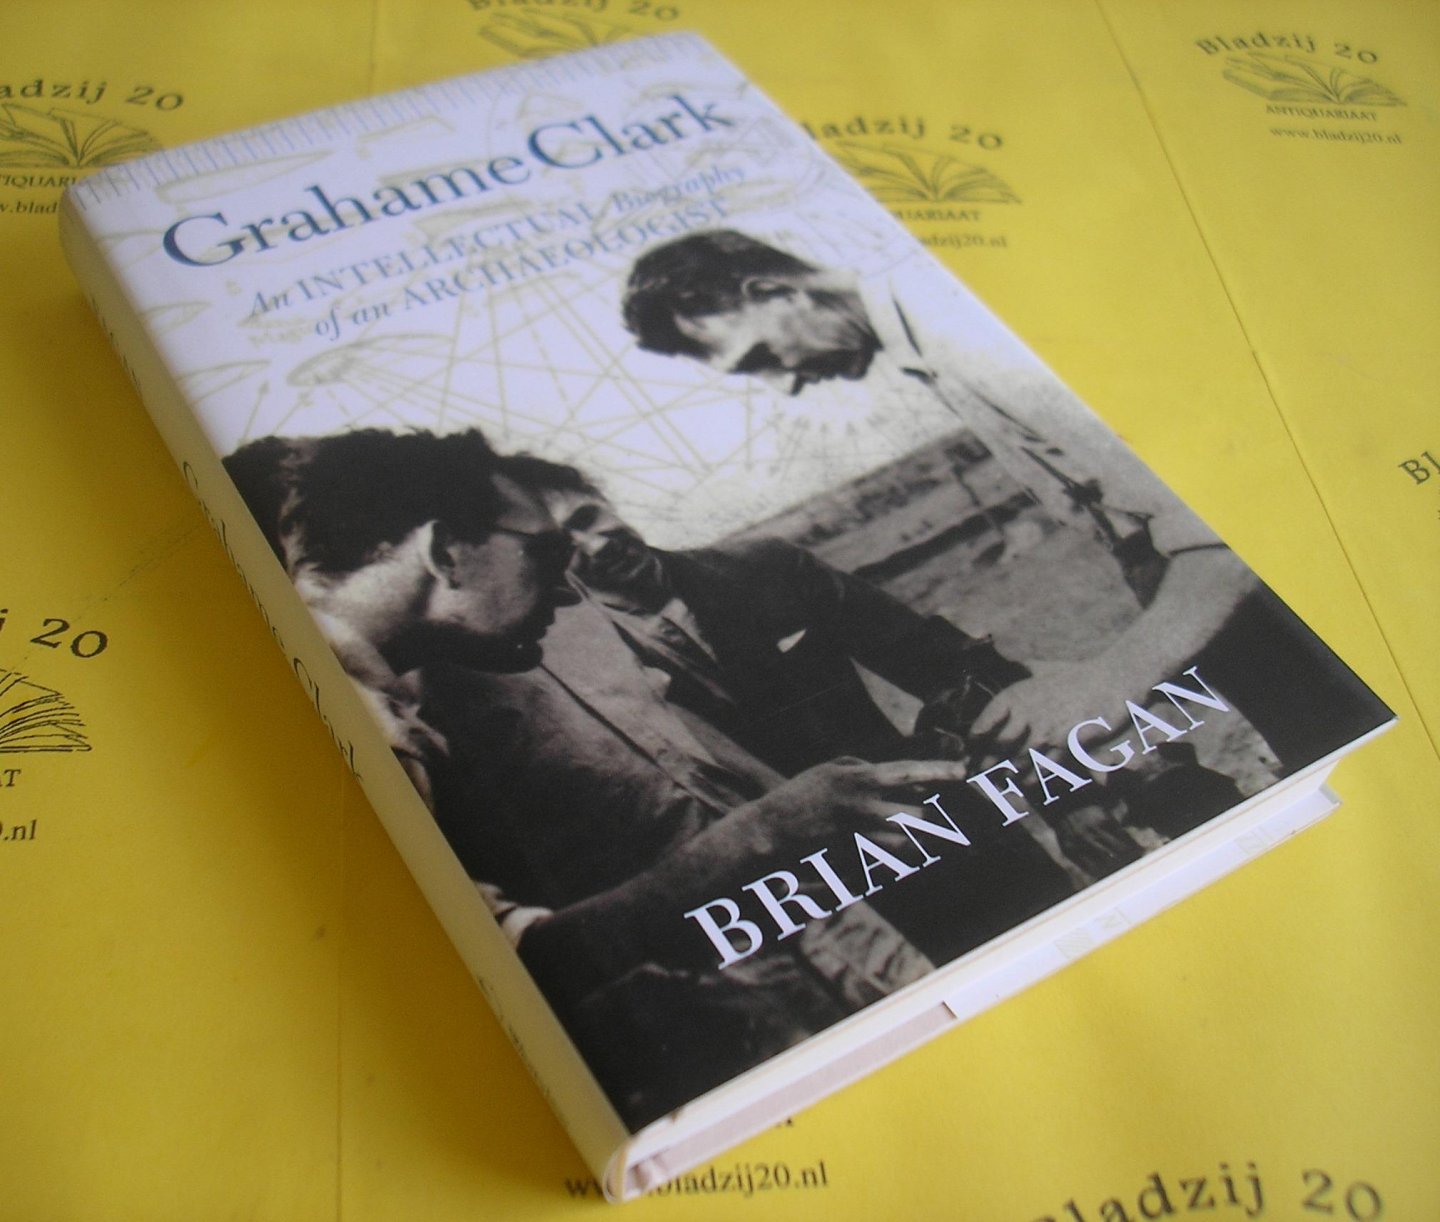 Fagan, Brian. - Grahame Clark. An intellectual biography of an archaeologist.